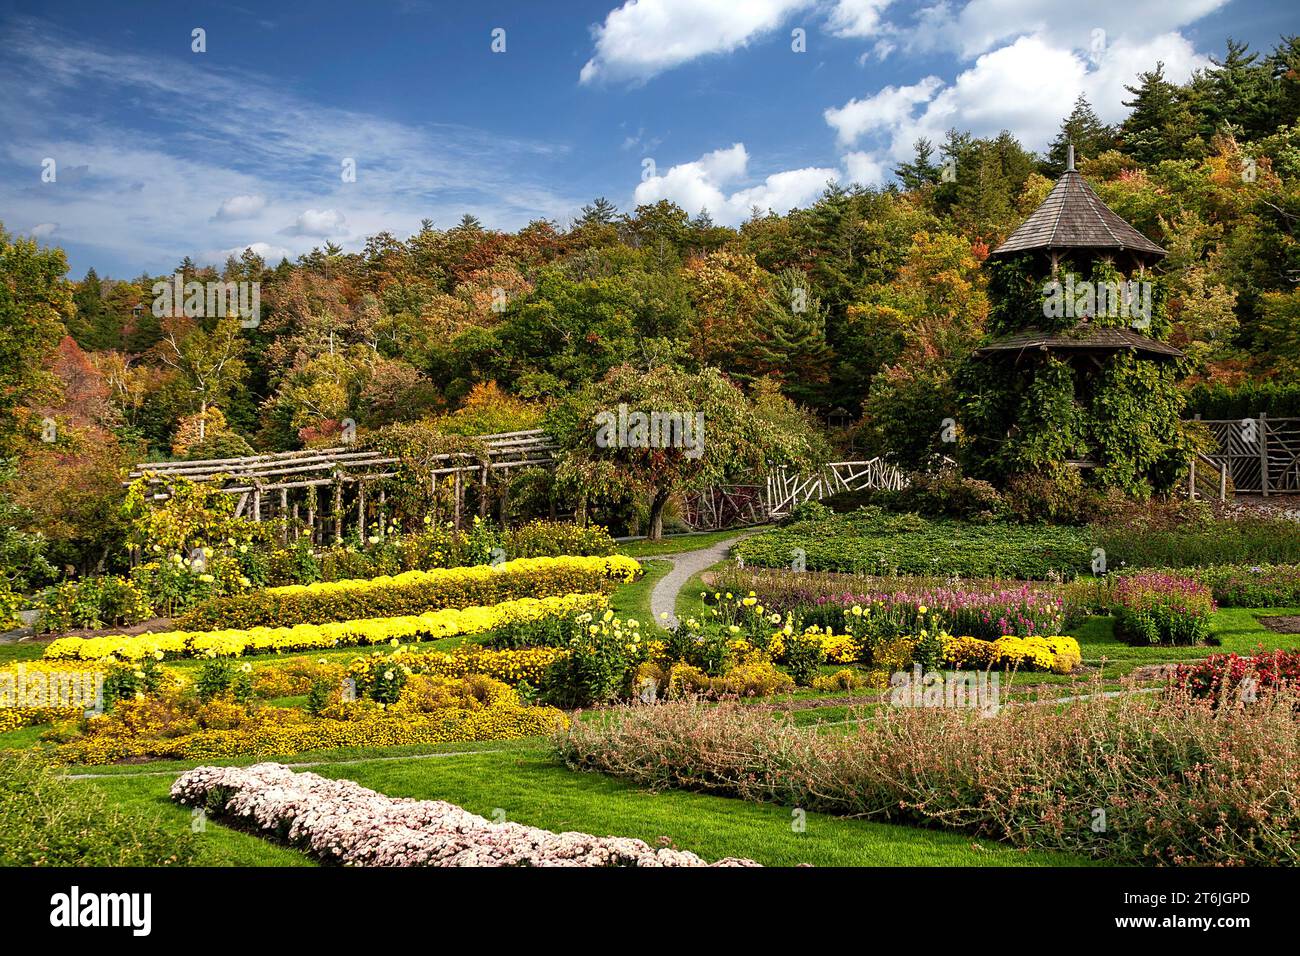 Flowers in Bloom in Mohonk Gardens, gelegen am Shawangunk Mountain Ridge in New Paltz, New York Stockfoto